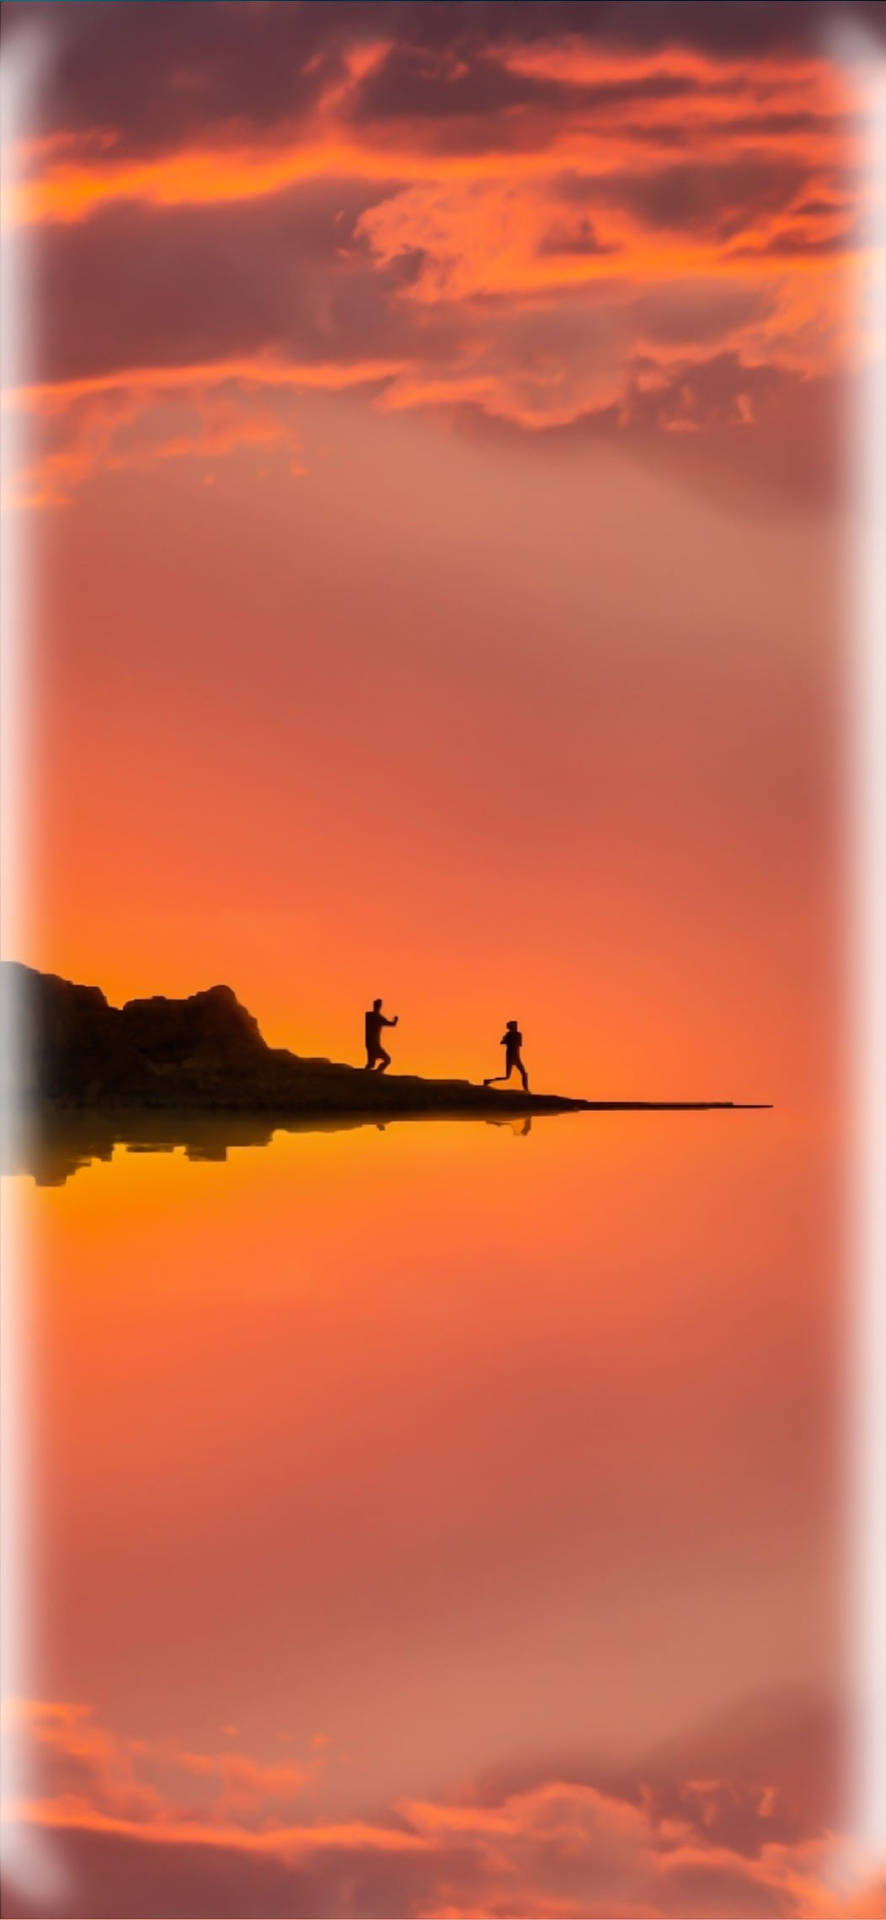 Caption: Romantic Sunset View On Samsung Full Hd